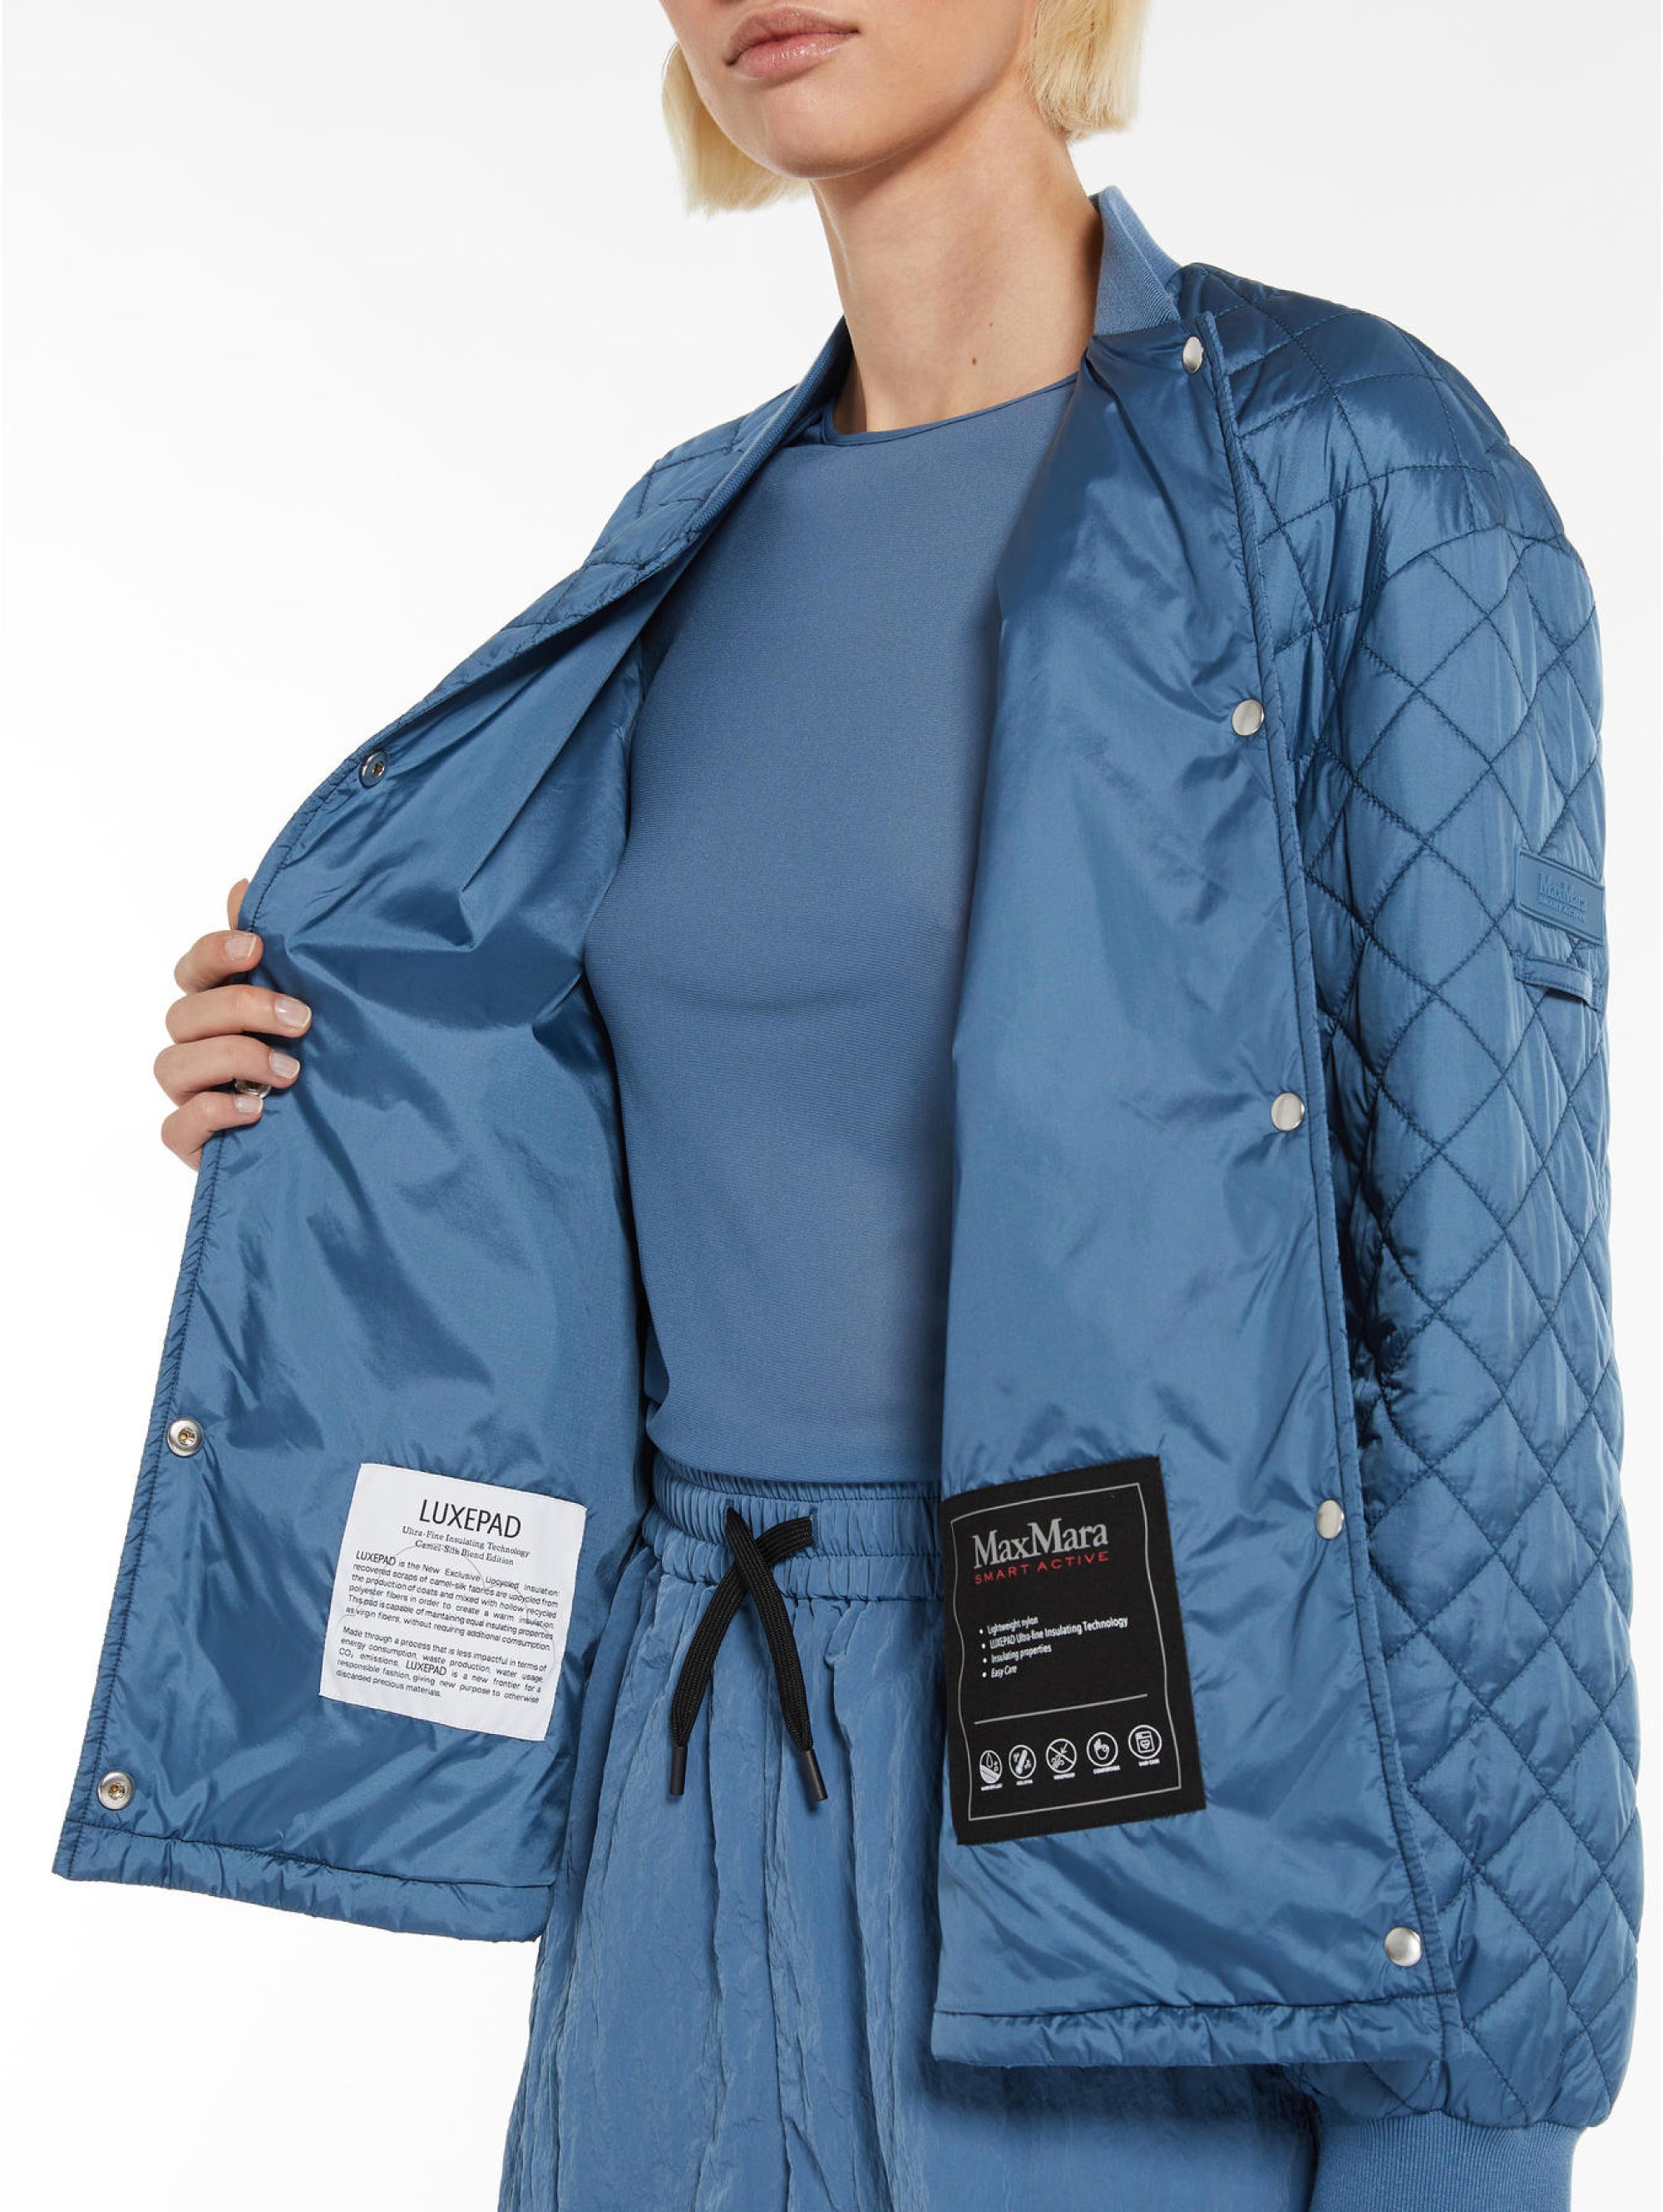 Padded jacket in Avio technical fabric